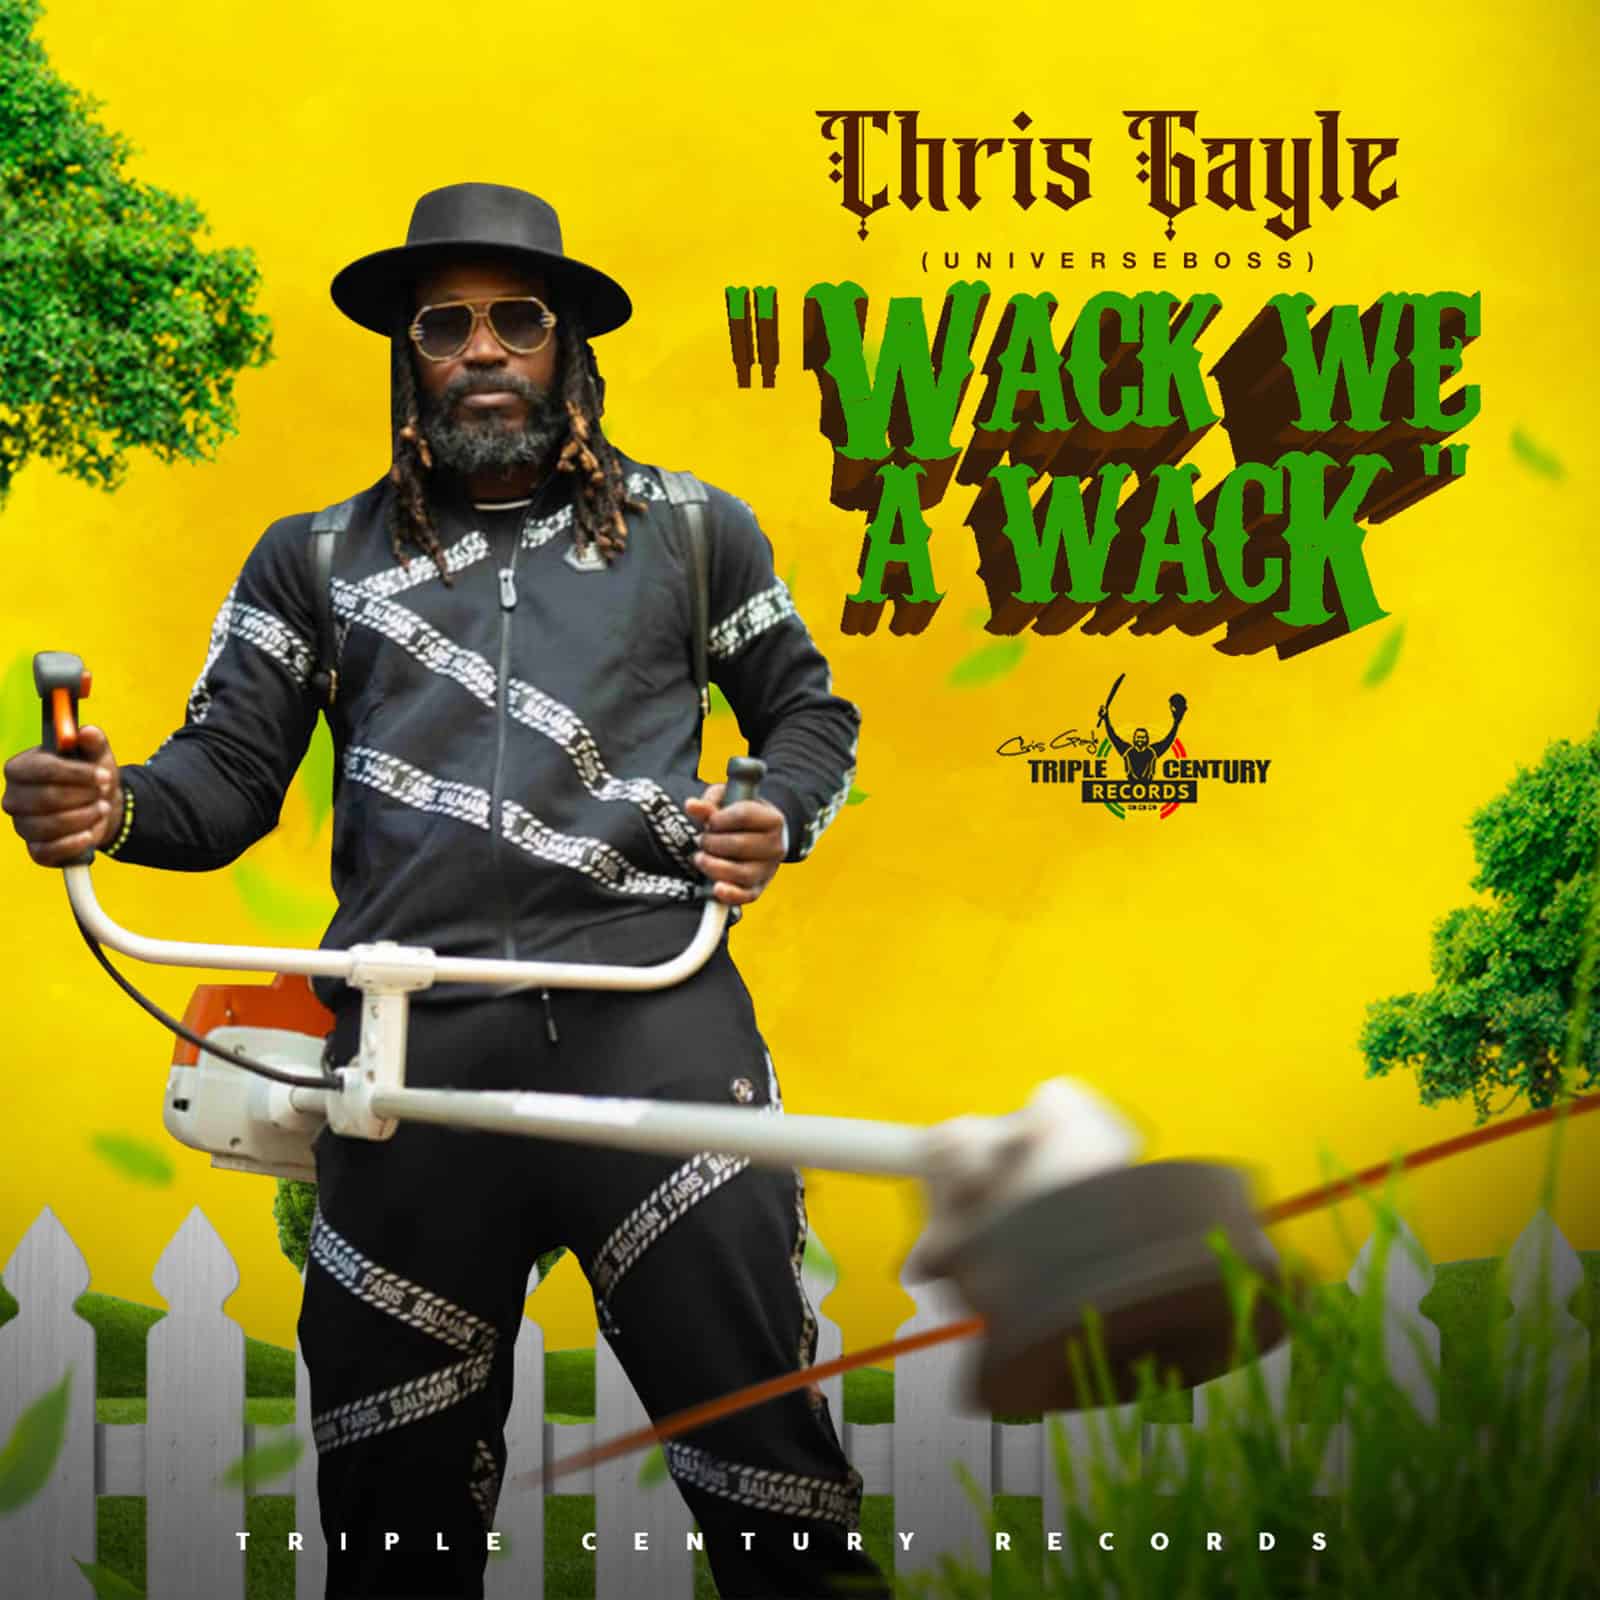 Chris Gayle (UniverseBoss) - Wack We a Wack